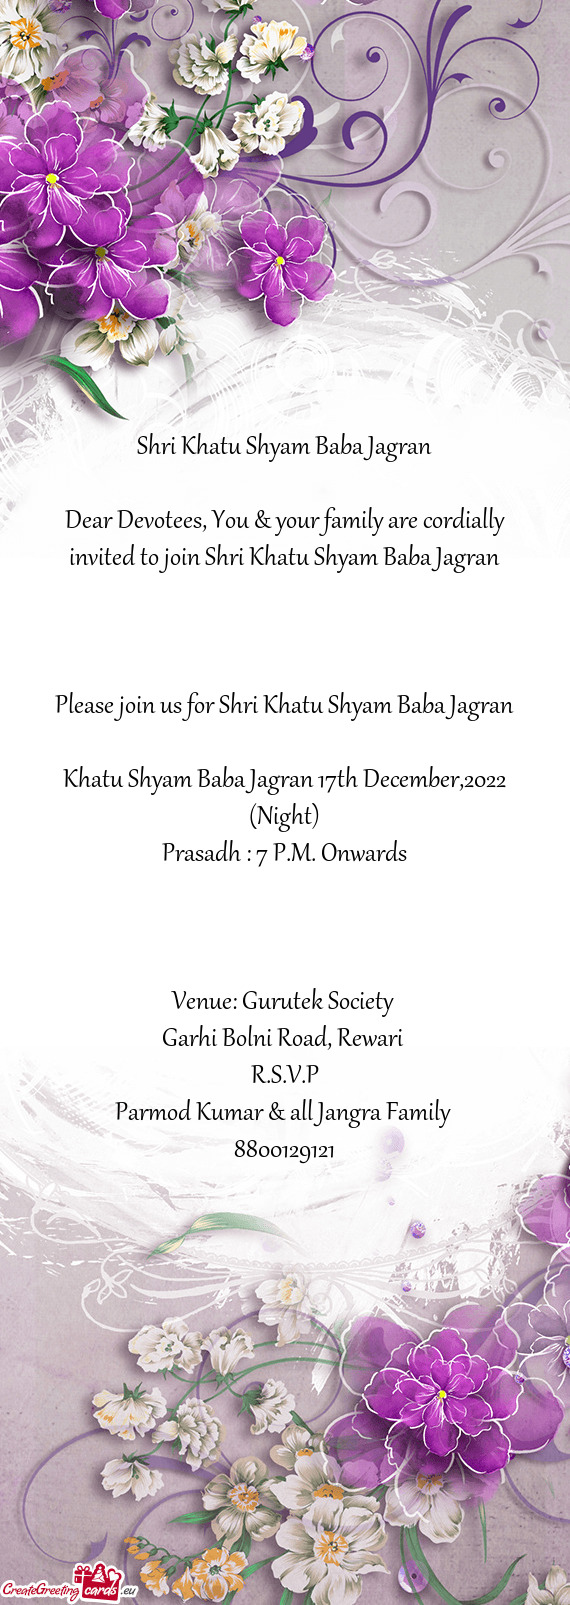 Please join us for Shri Khatu Shyam Baba Jagran